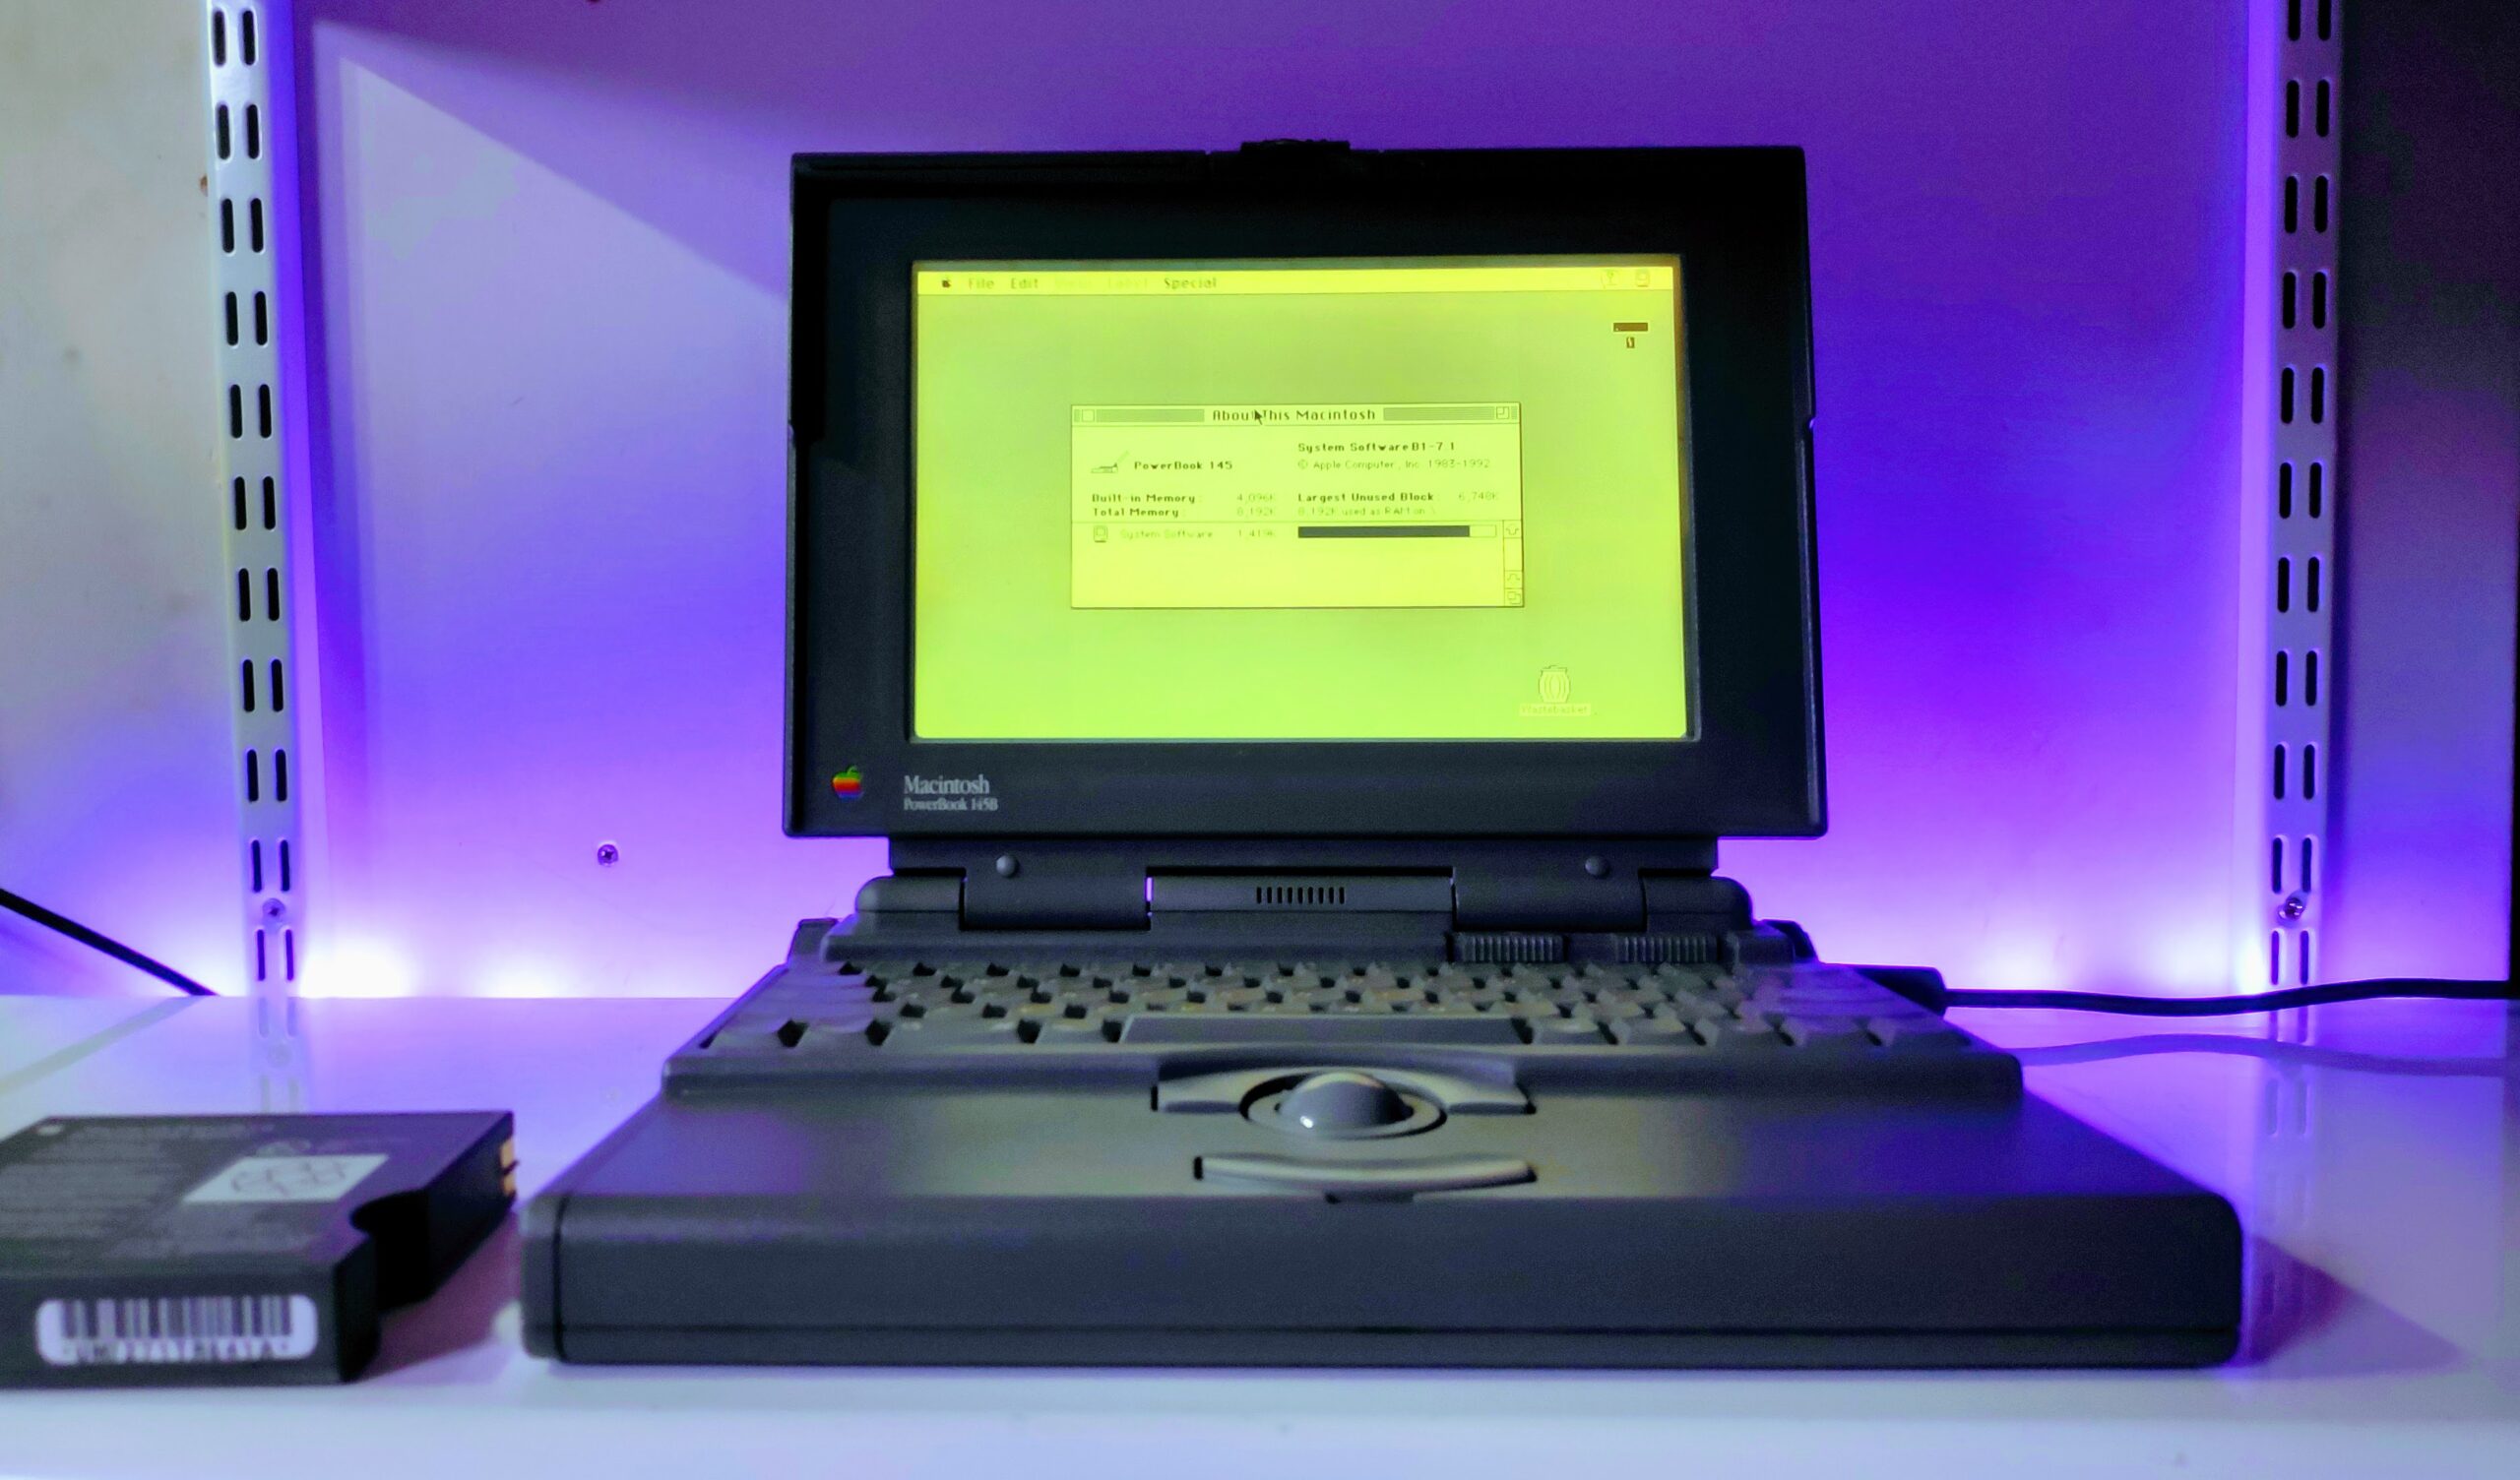 Original Apple Powerbook 145B Retro Laptop(Working) - RetroNerd